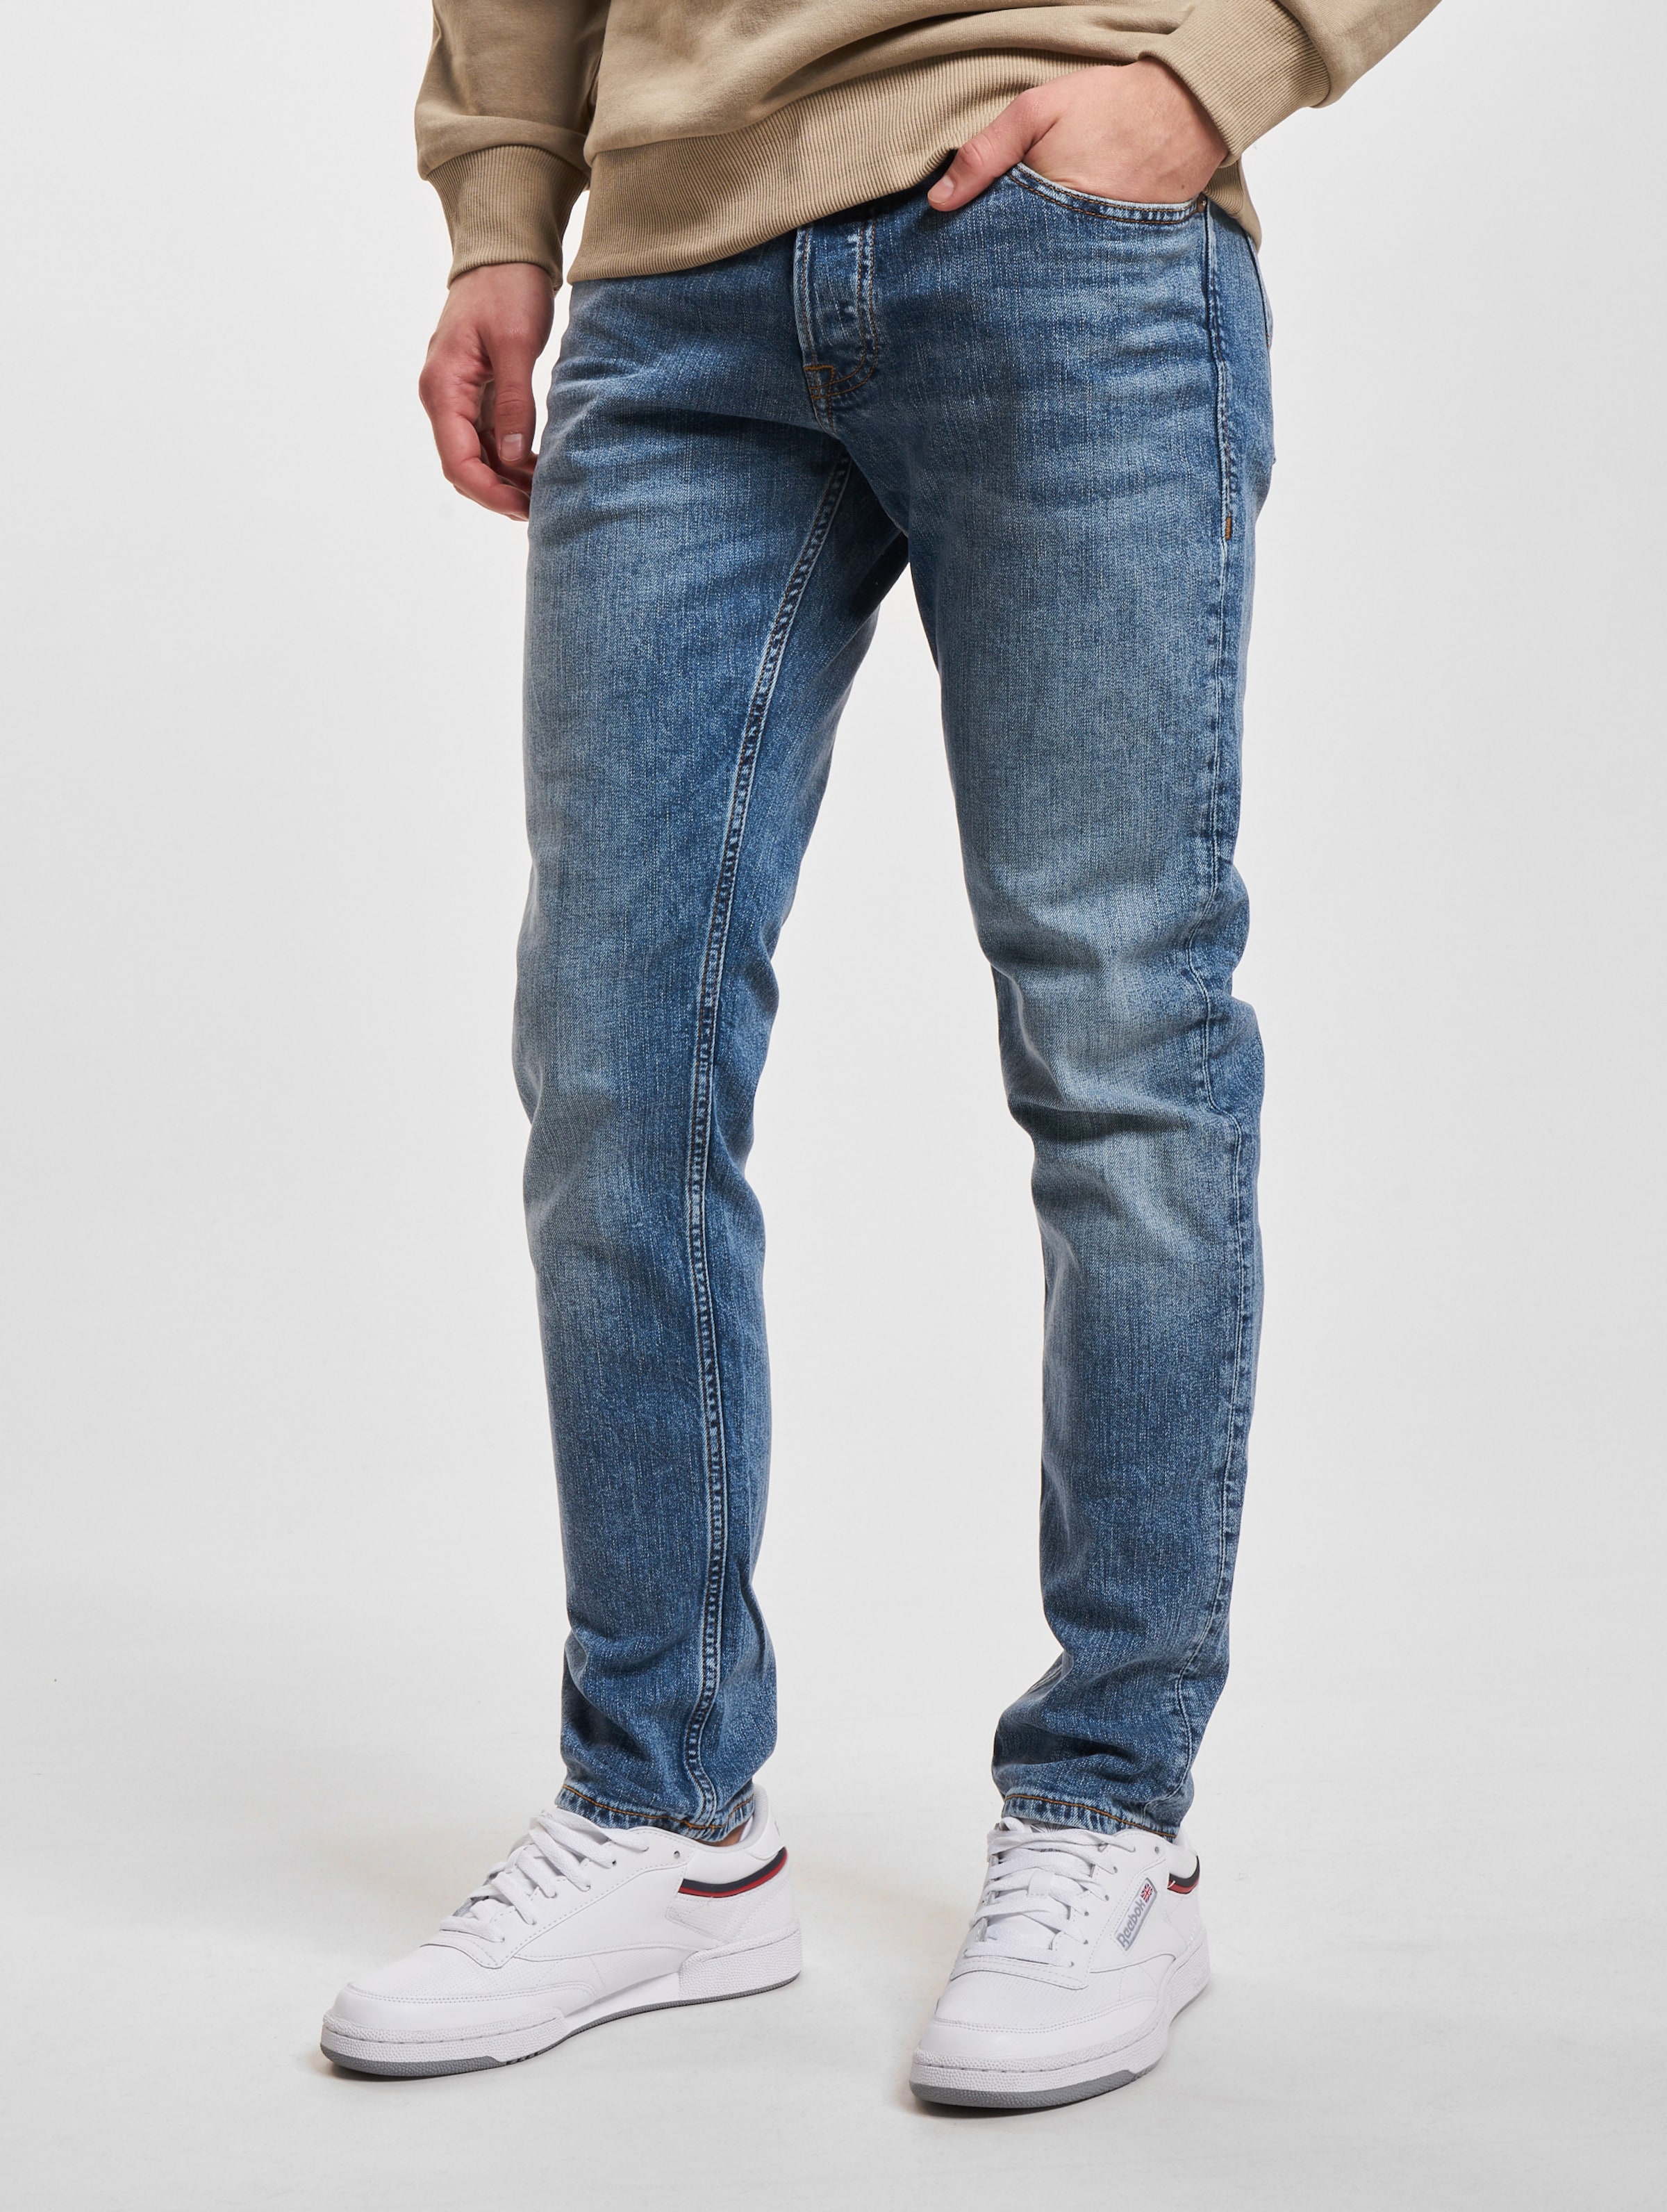 Jack & Jones Glenn Original Skinny Fit Jeans Mannen op kleur blauw, Maat 3232